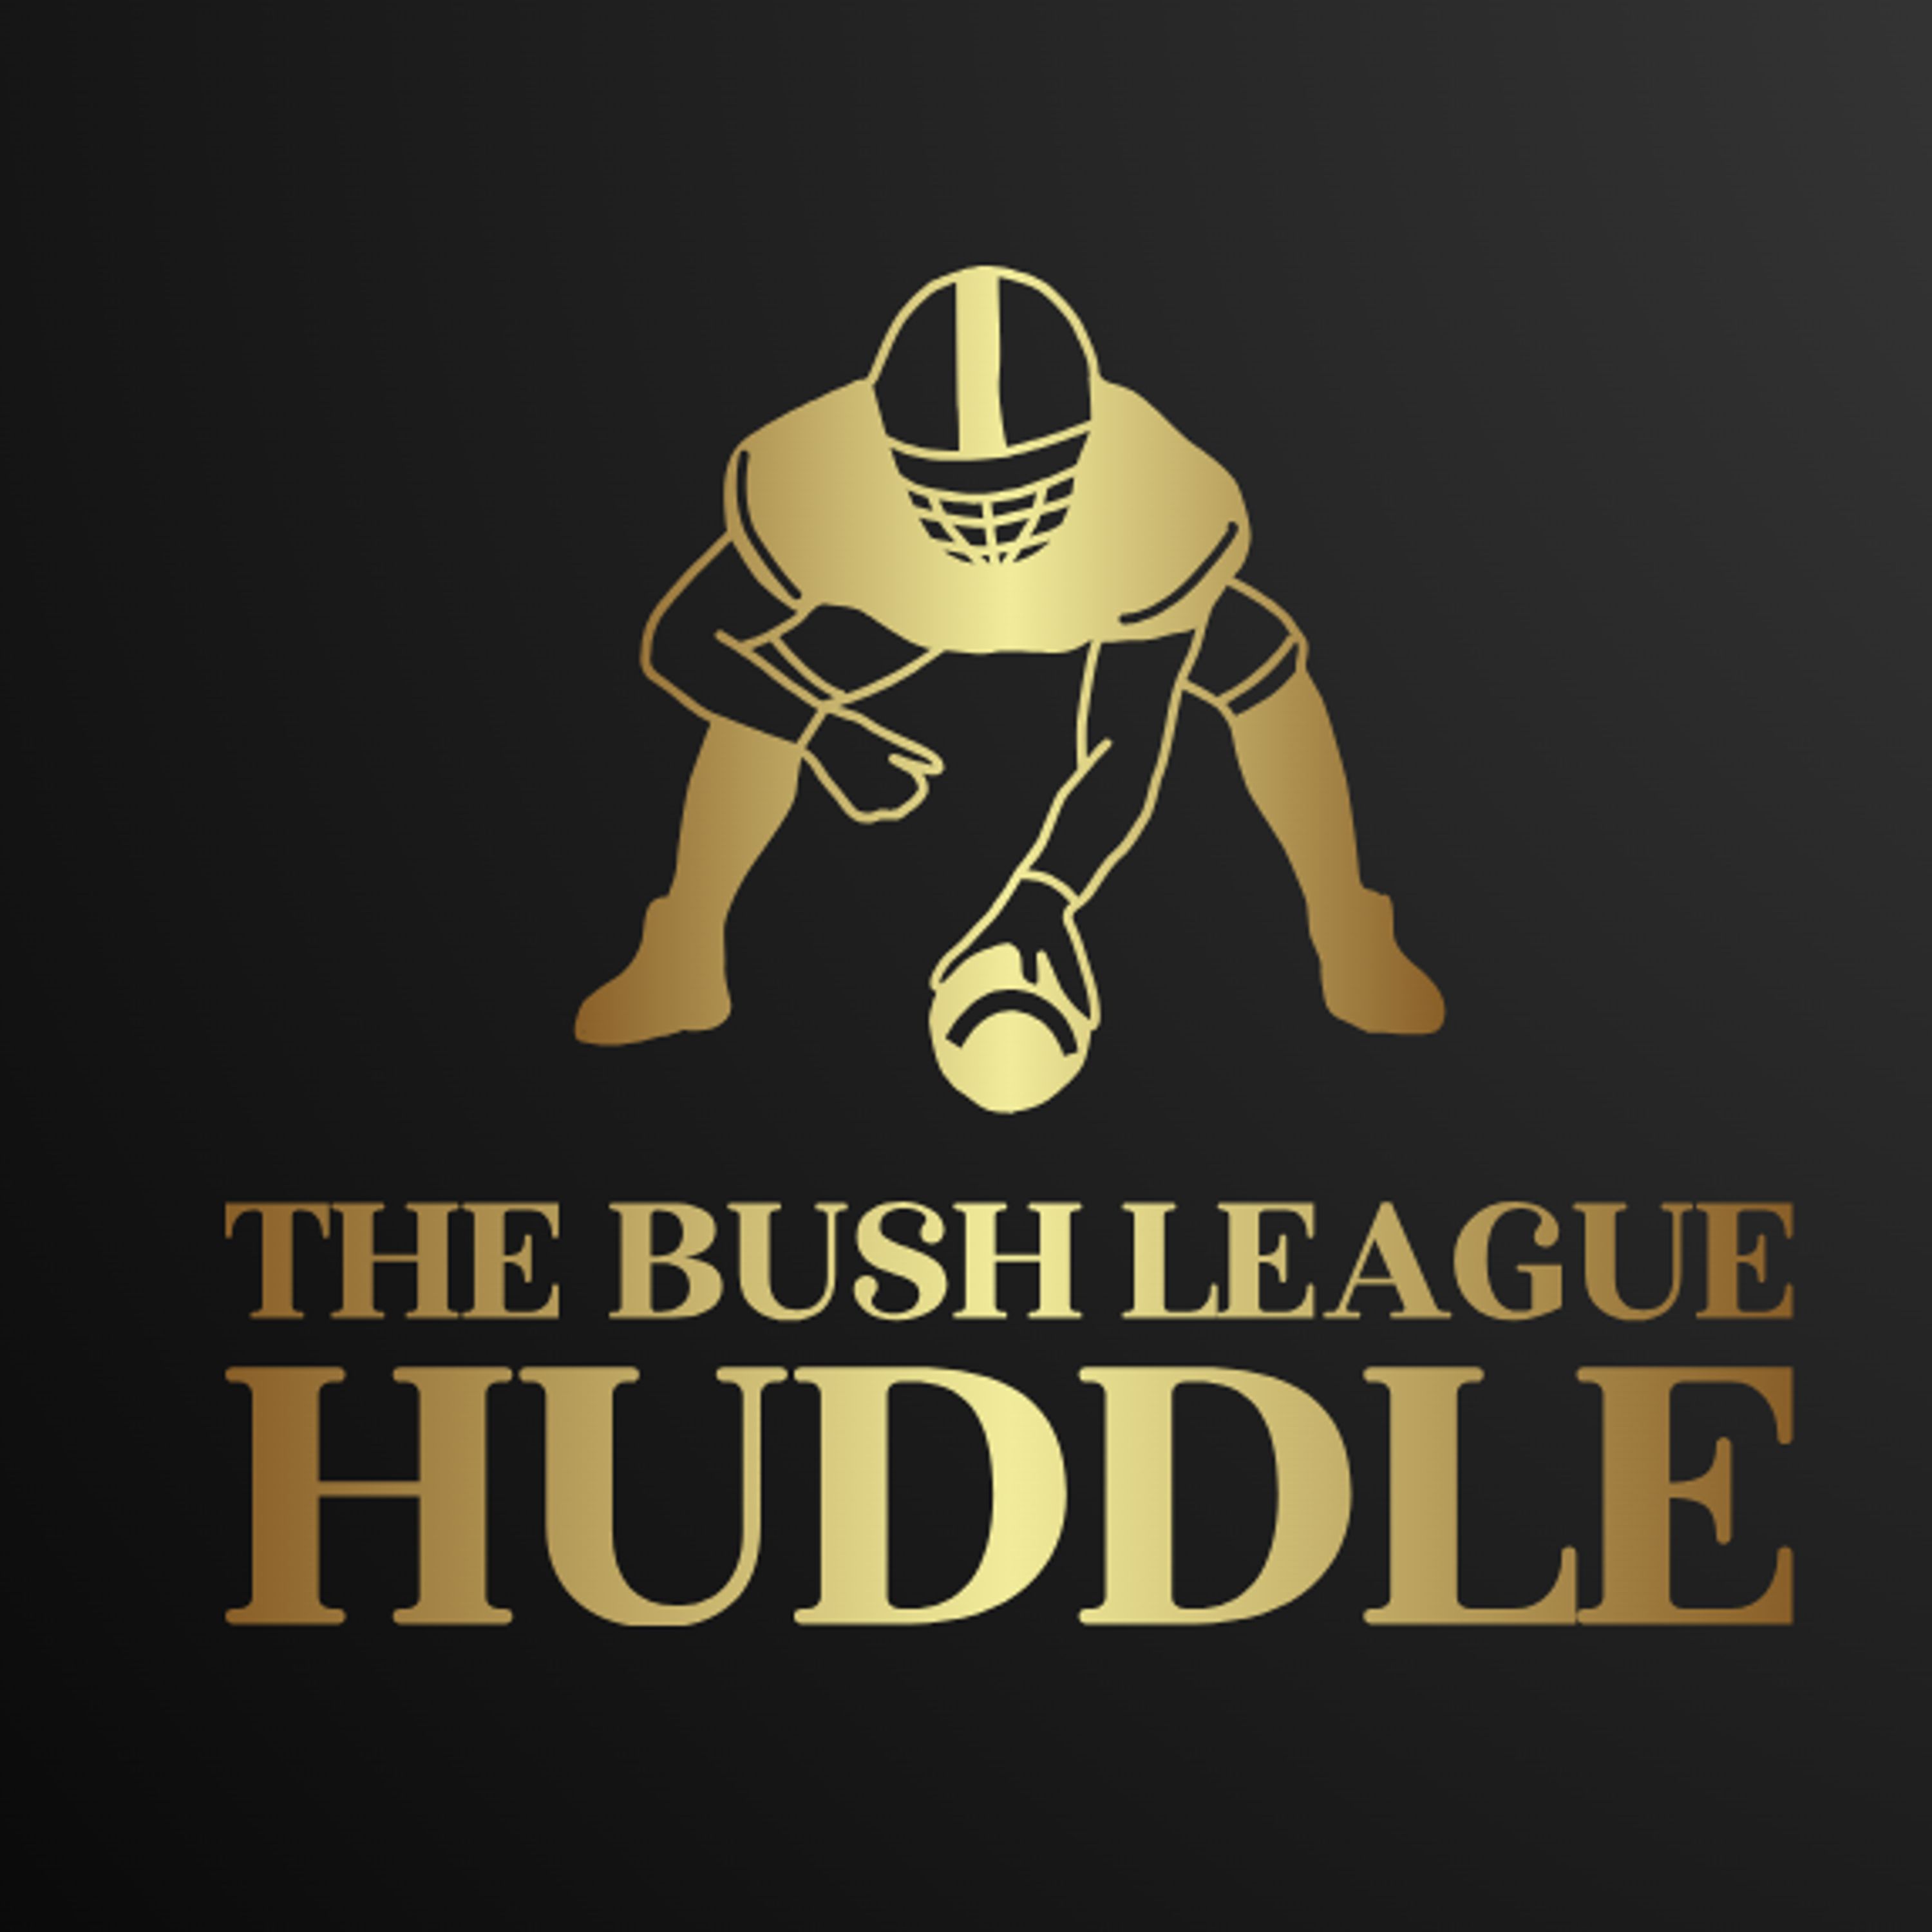 Introducing The Bush League Huddle